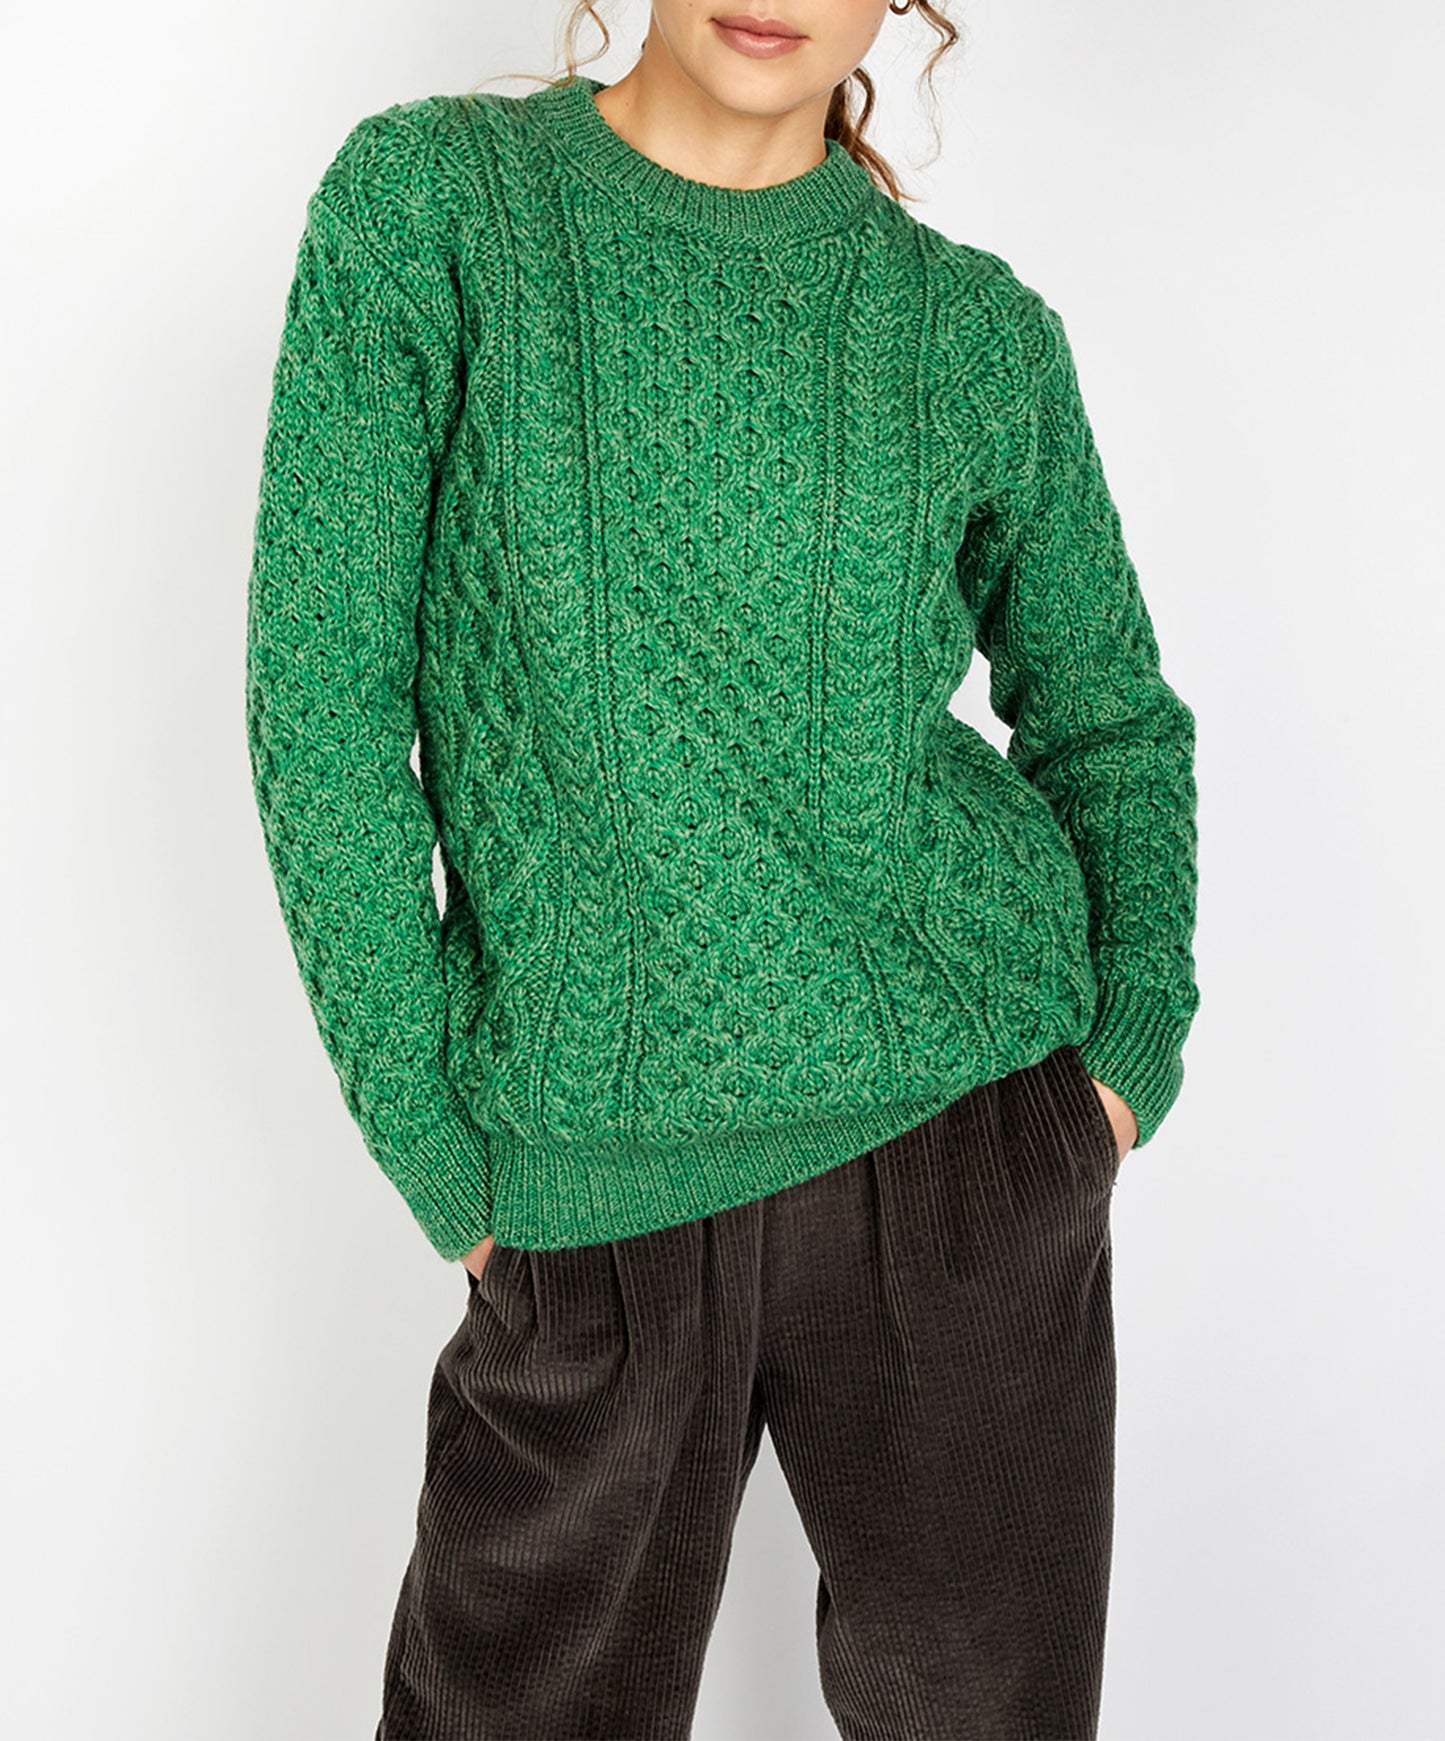 IrelandsEye Knitwear Blasket Honeycomb Stitch Womens Aran Sweater Green Marl